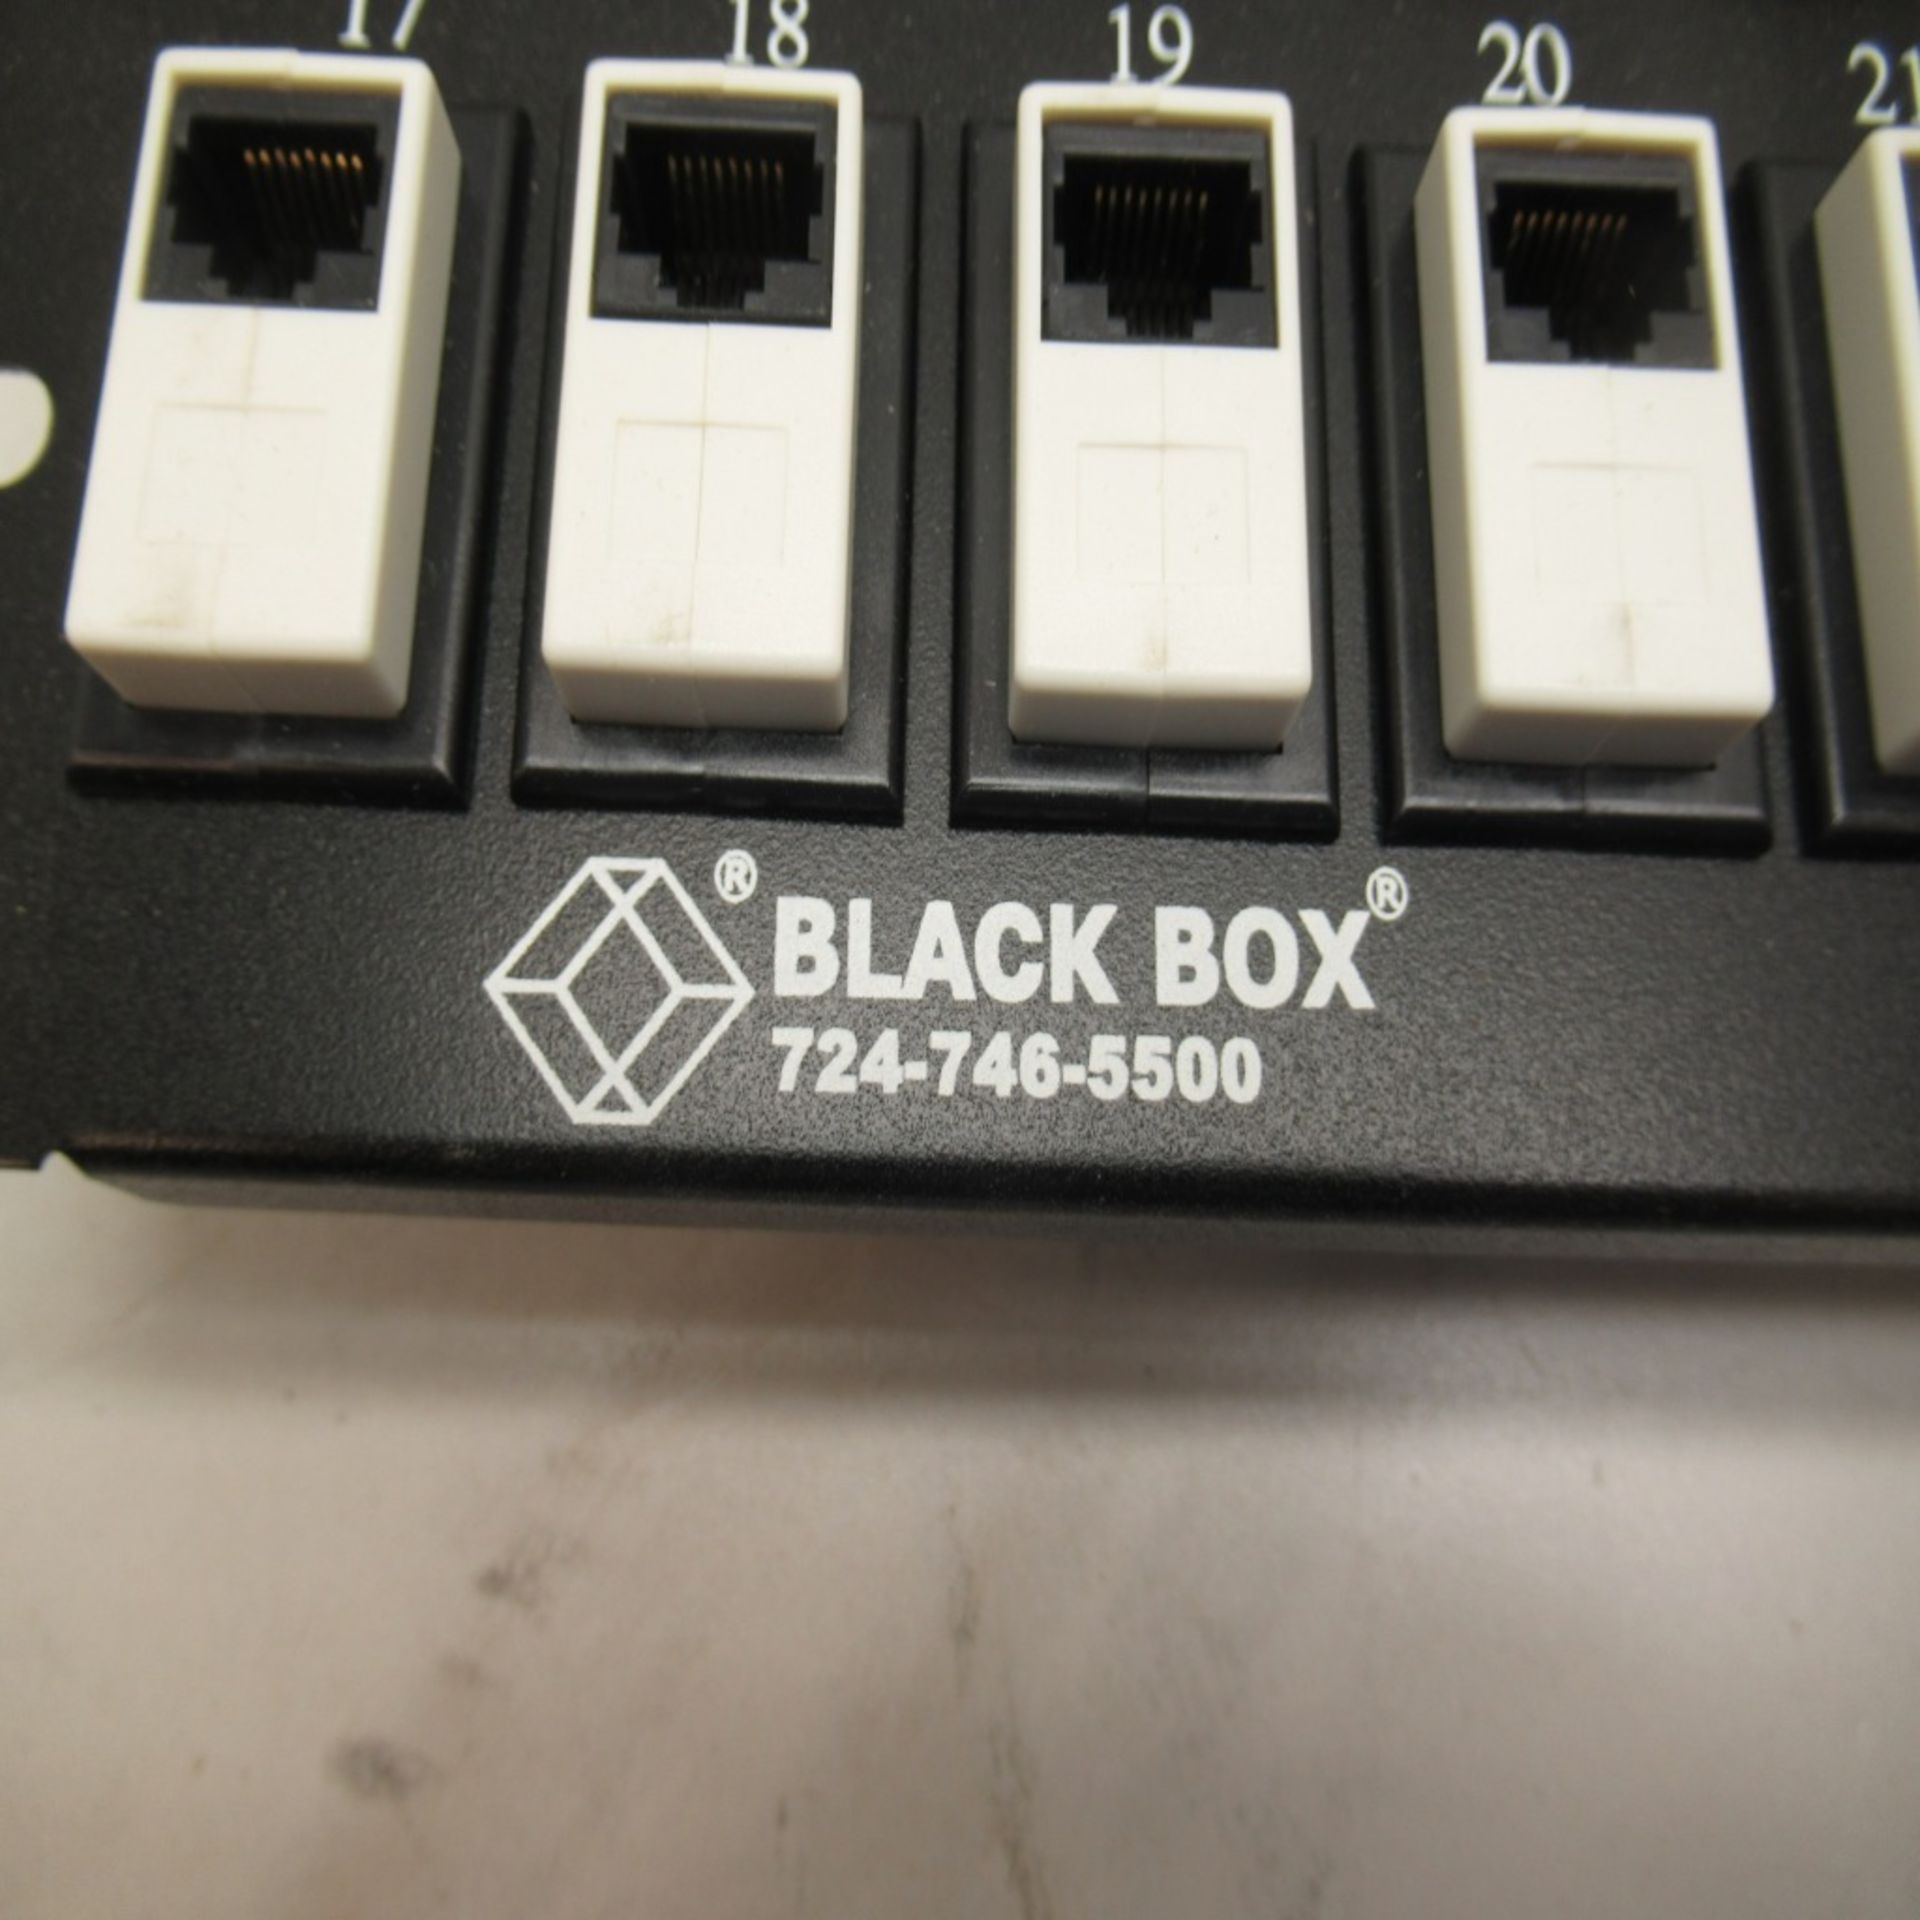 BLACKBOX JPM802A - Image 2 of 7